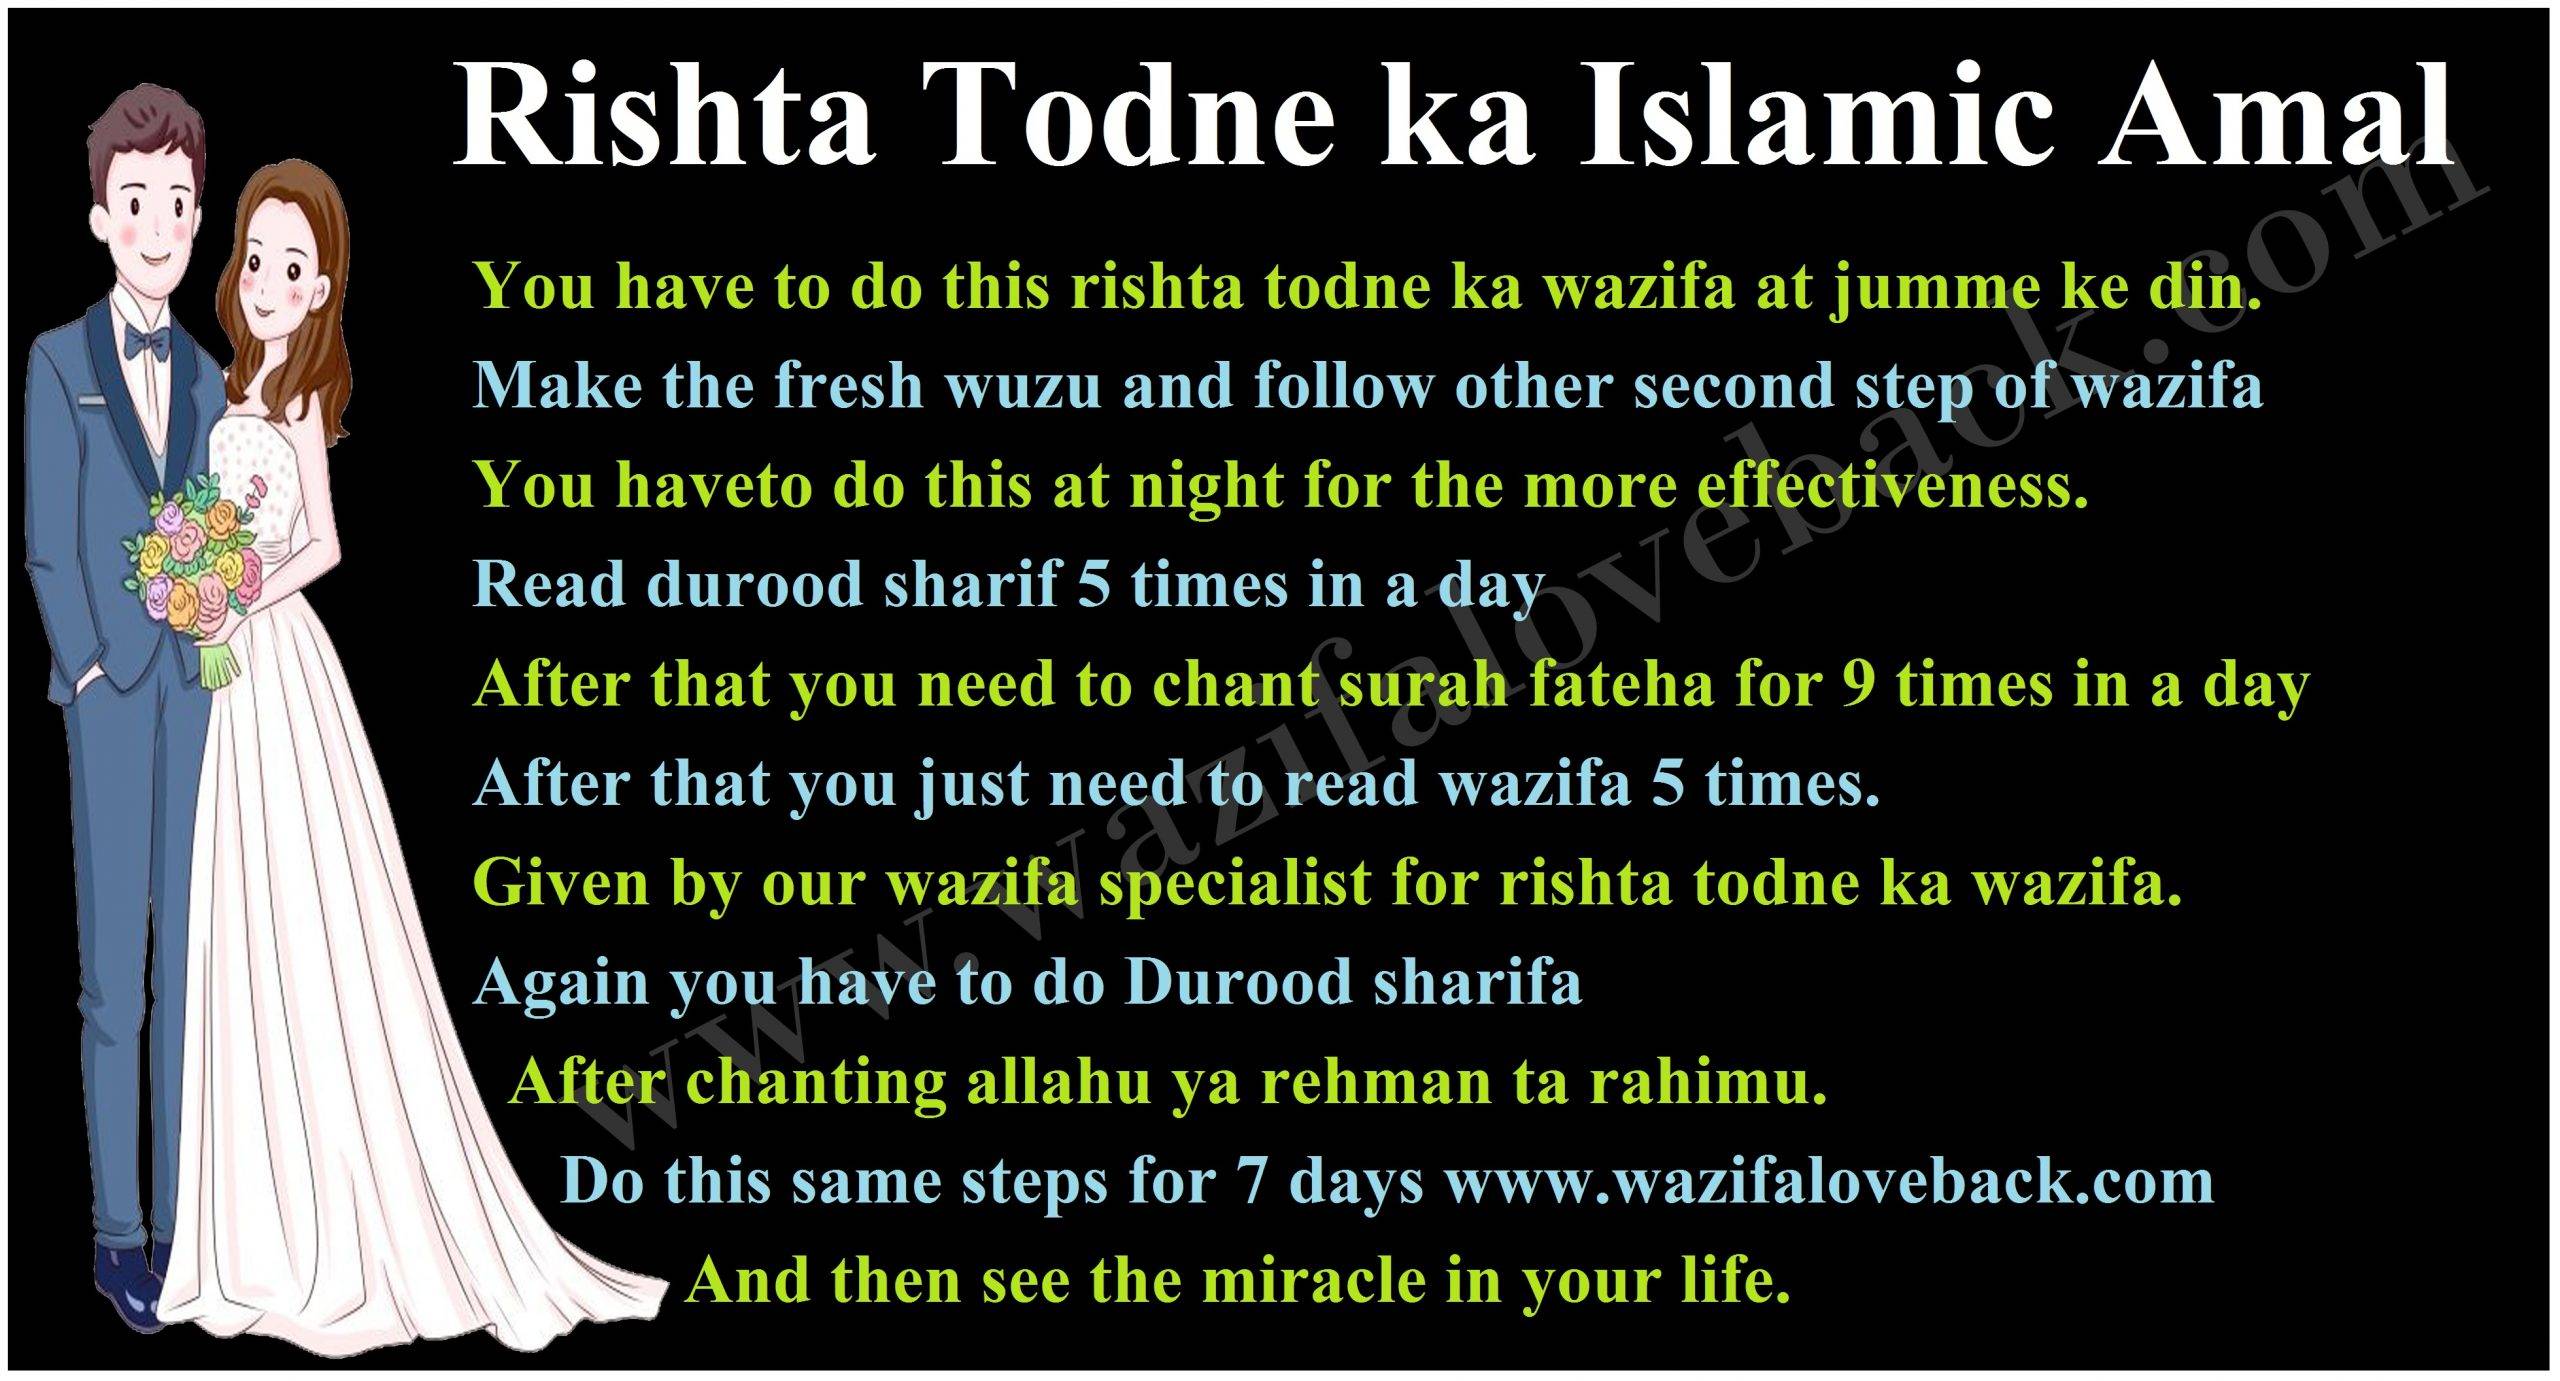 Rishta Todne ka Islamic Amal